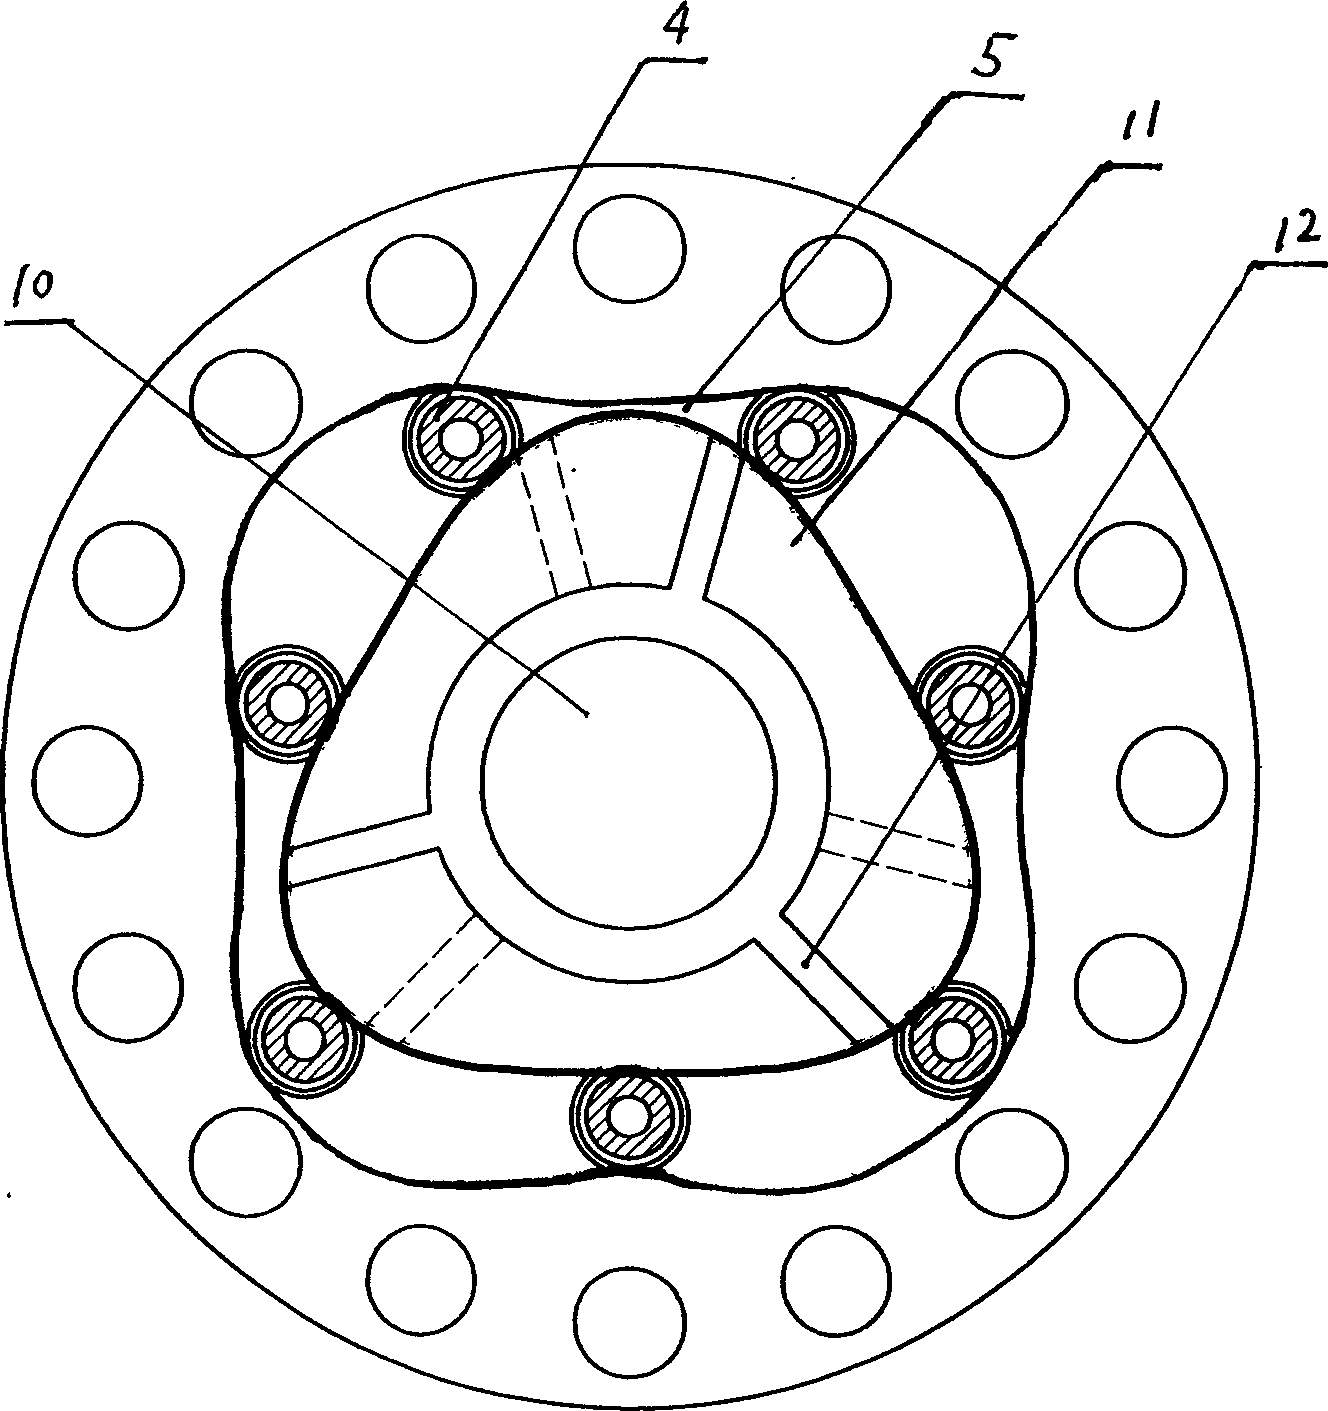 Non-circular gear epicyclic train shell-rotating hydraulic motor